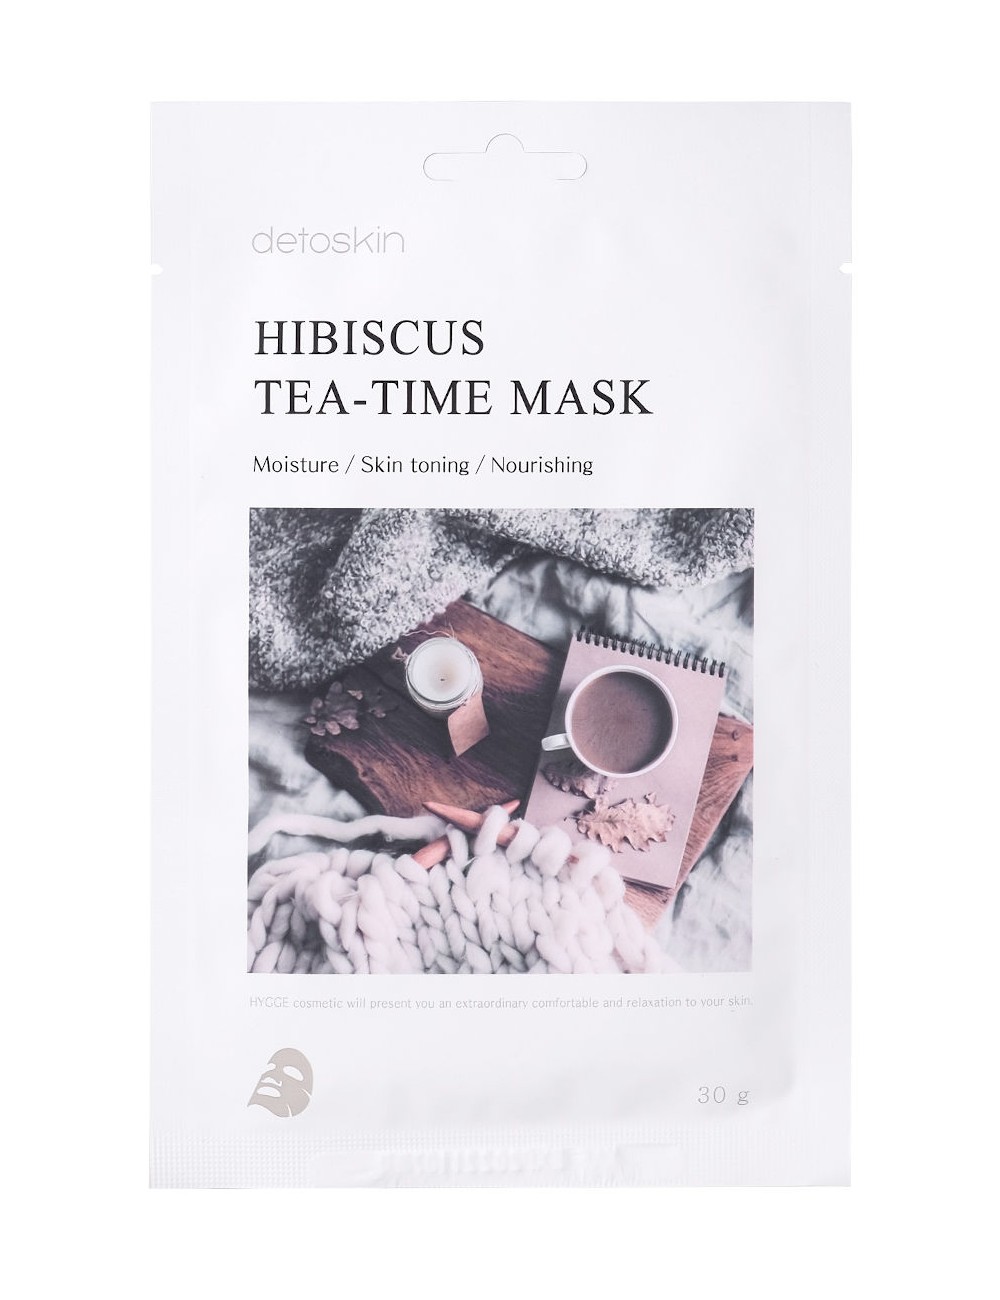 Mascarillas Coreanas al mejor precio: Hibiscus Tea-Time Mask - Mascarilla Iluminadora e hidratante de Detoskin en Skin Thinks - Piel Seca